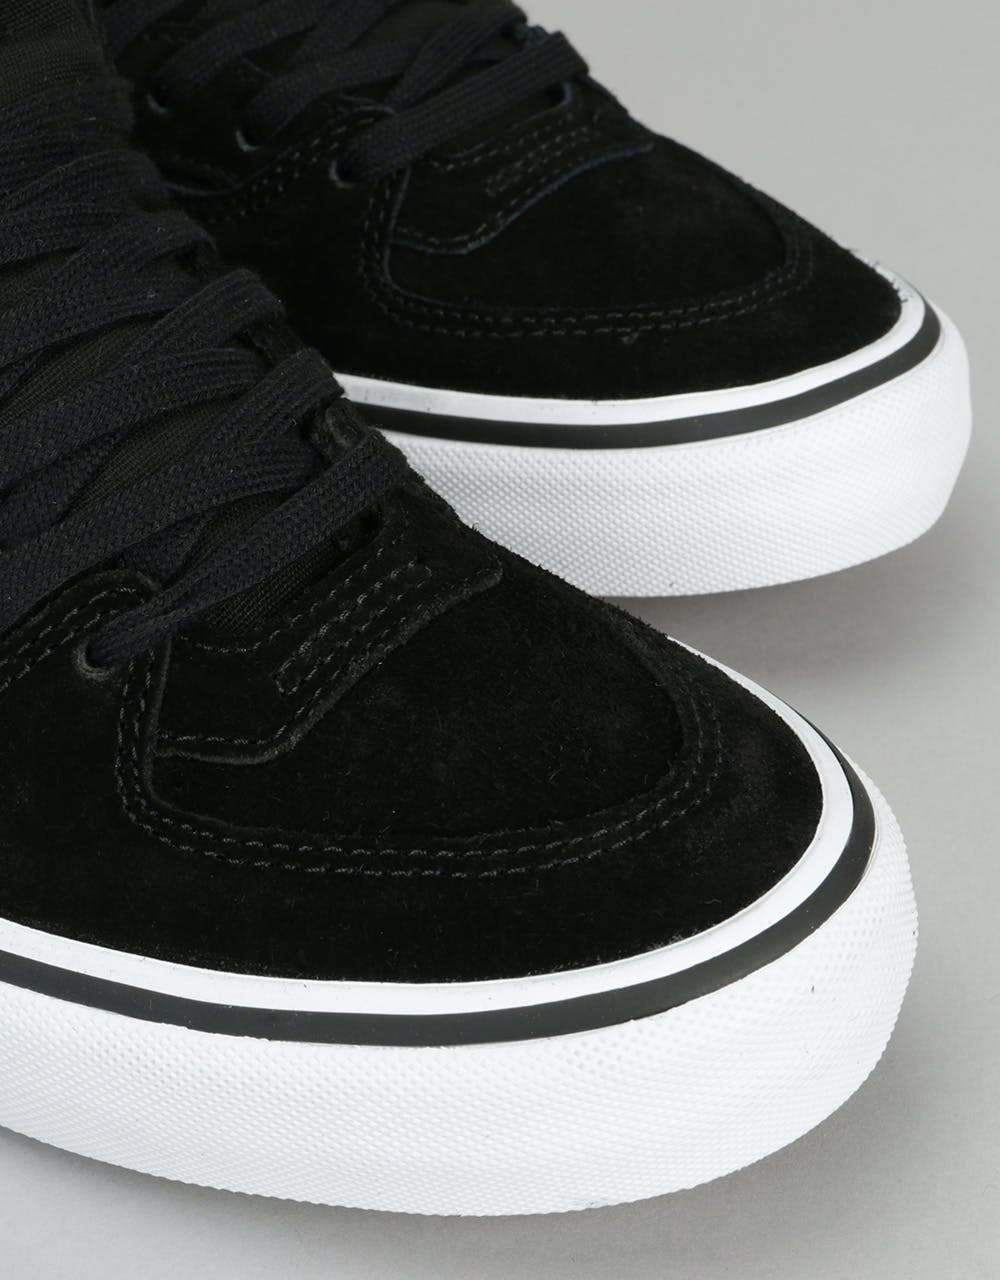 Vans Half Cab Pro Skate Shoes - Black/Black/White